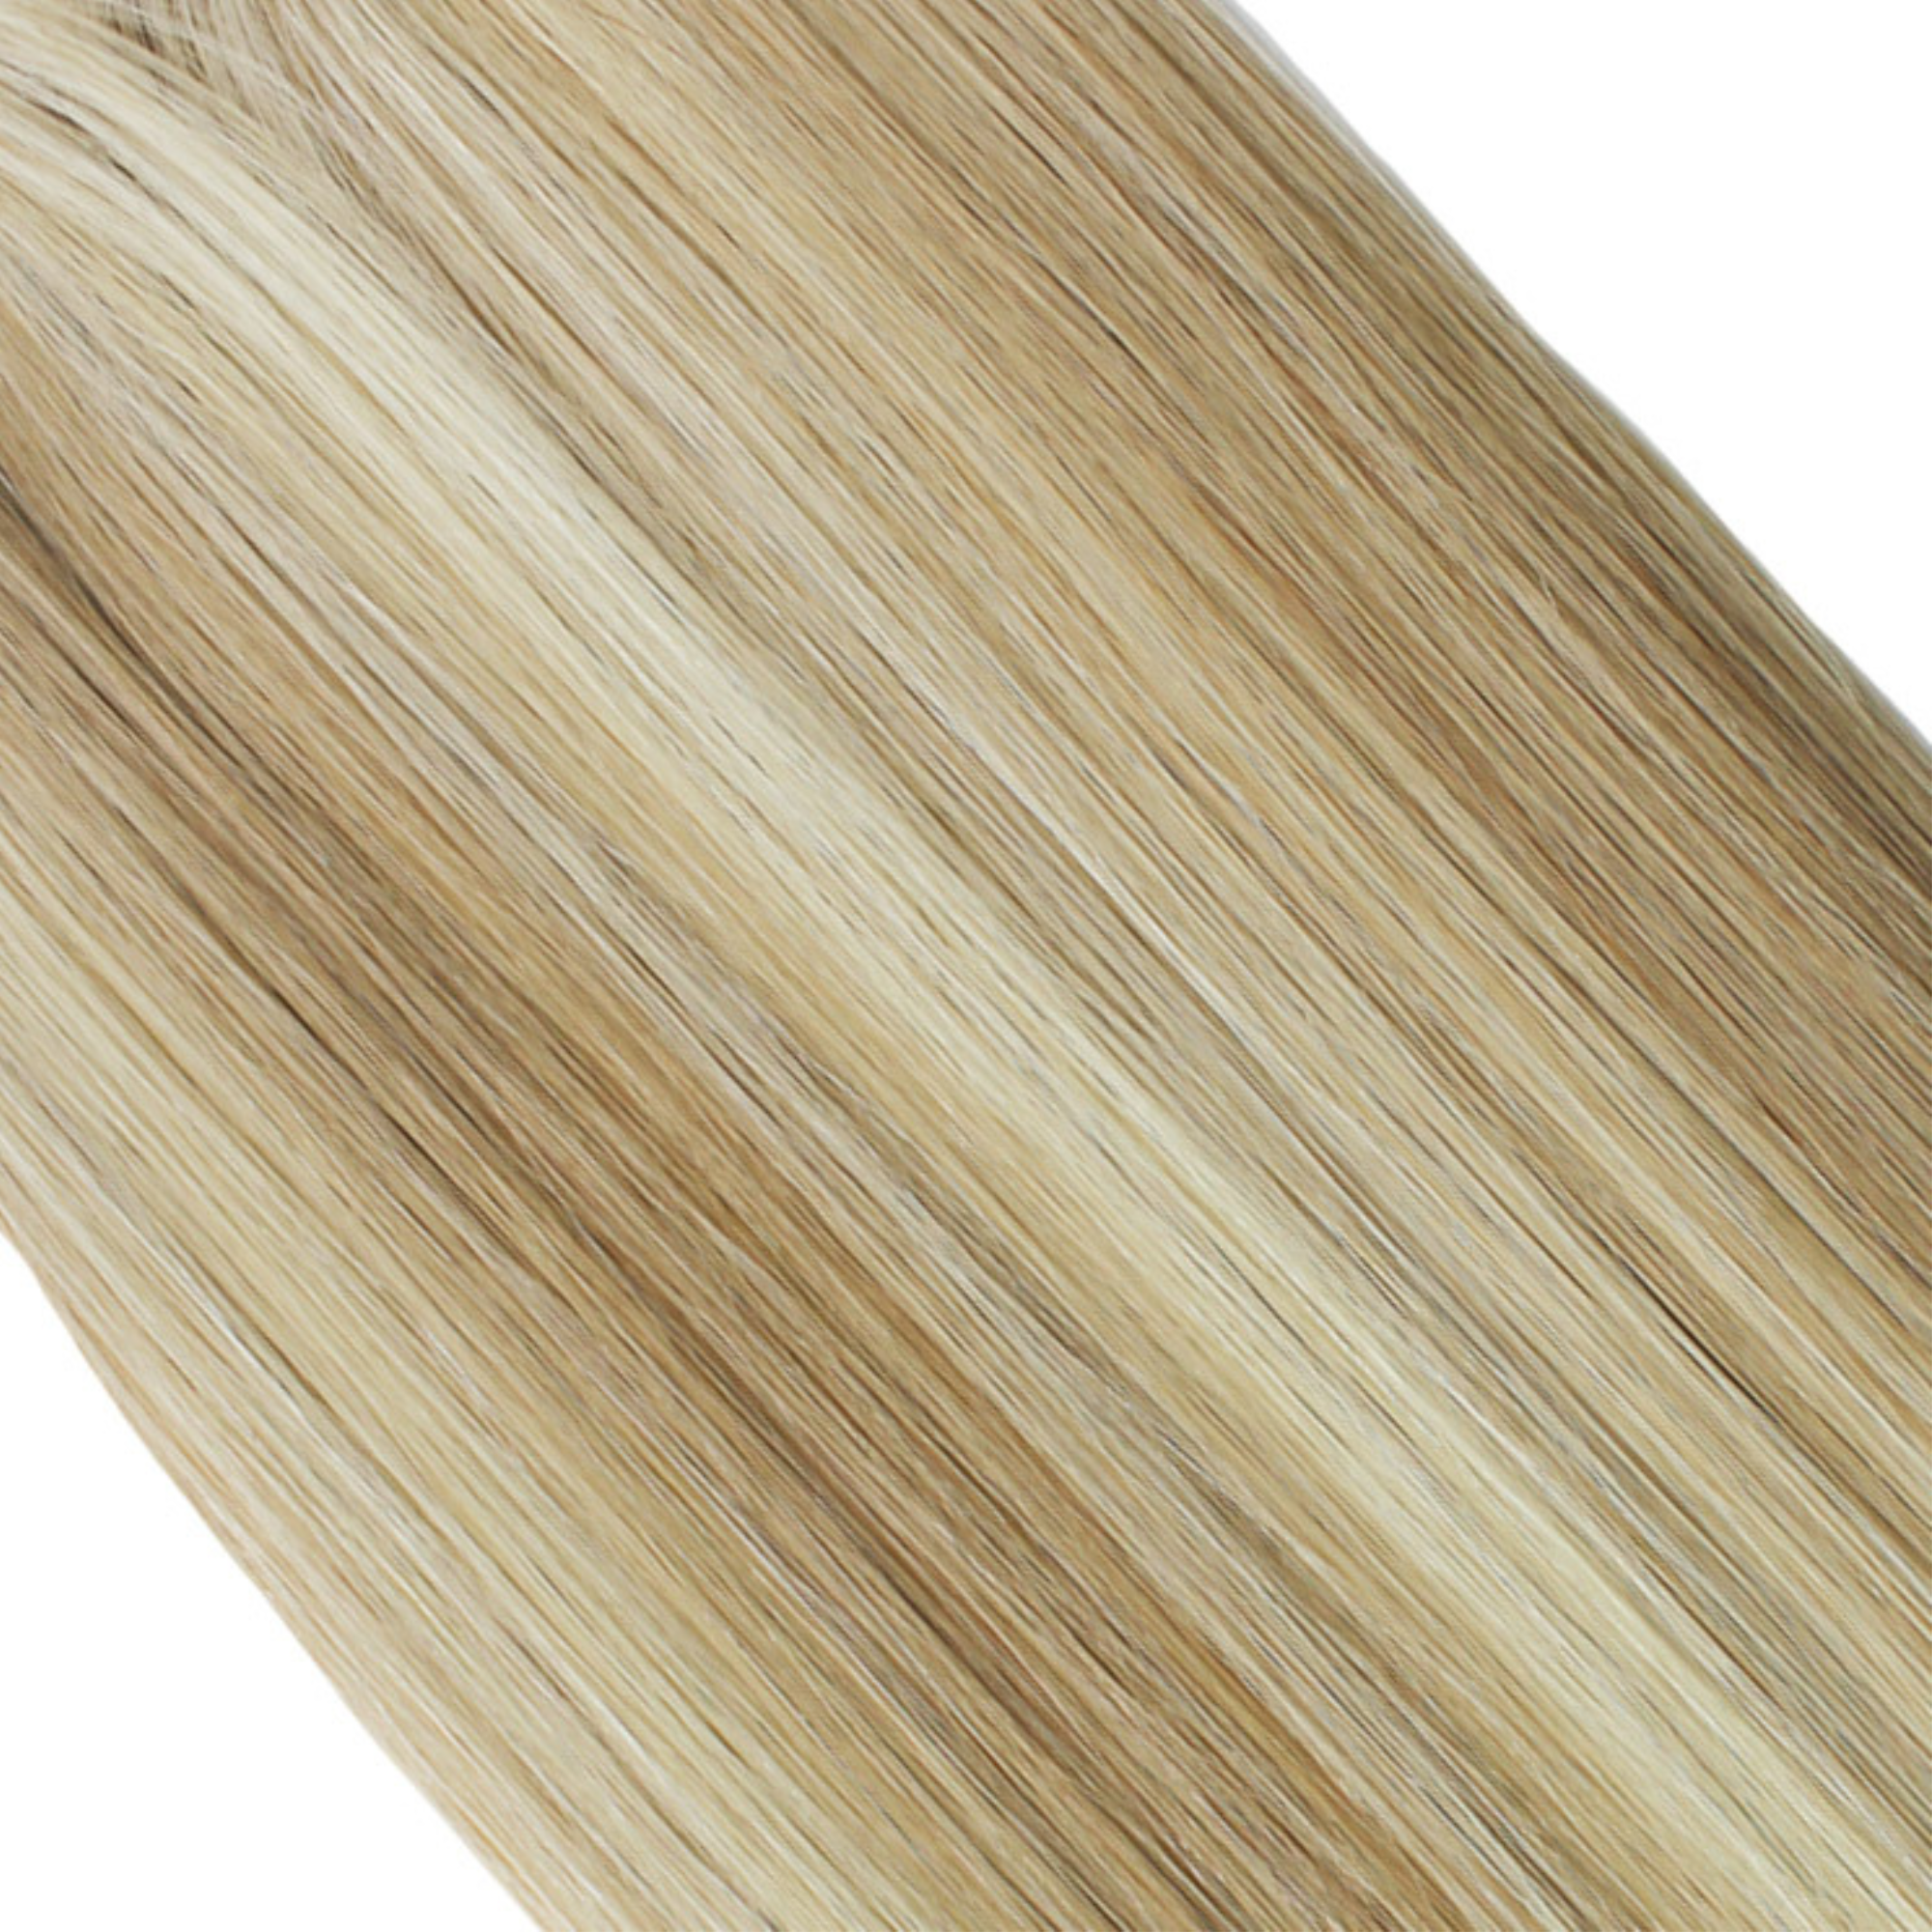 "hair rehab london 18" tape hair extensions shade swatch titled coachella blonde"